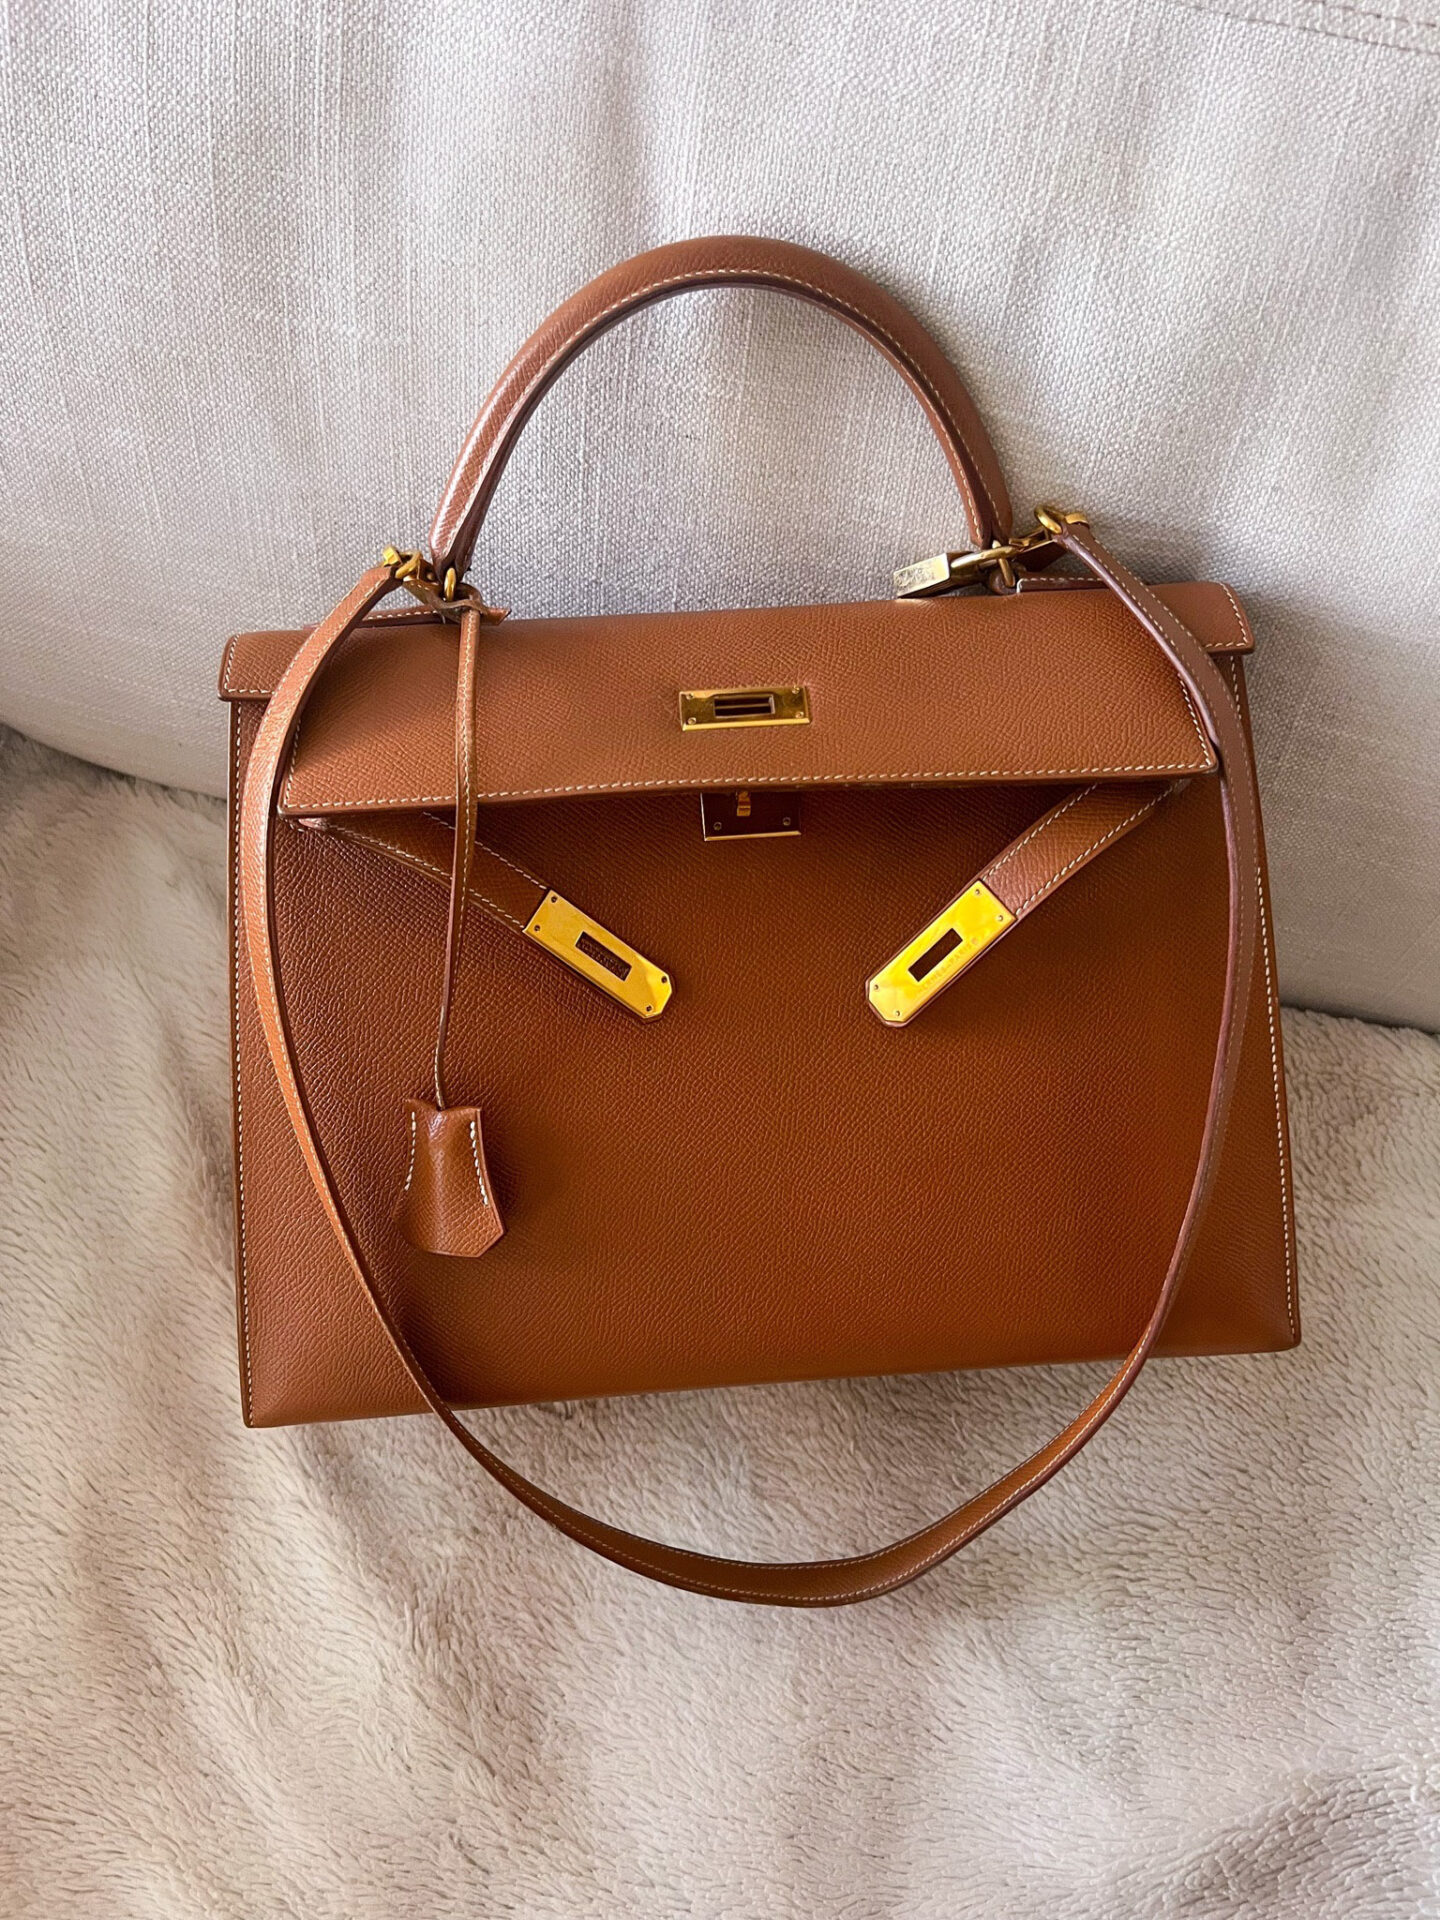 Dallas fashion blogger reveals the Kelly 32 handbag